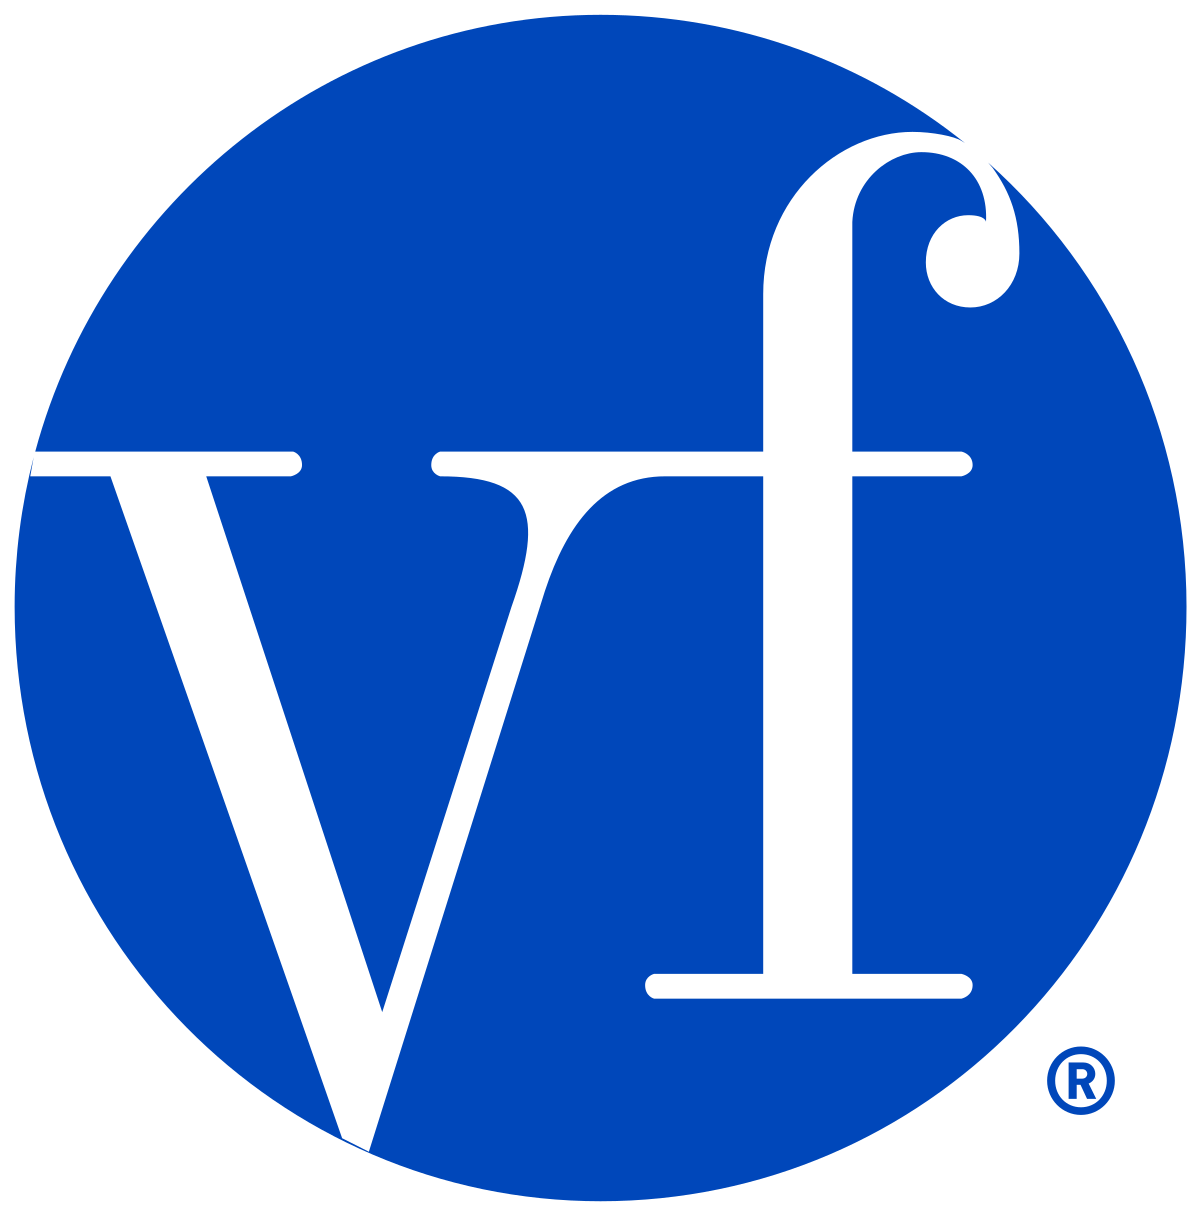 Outdoor Apparel Sportswear Company Logo - VF Corporation